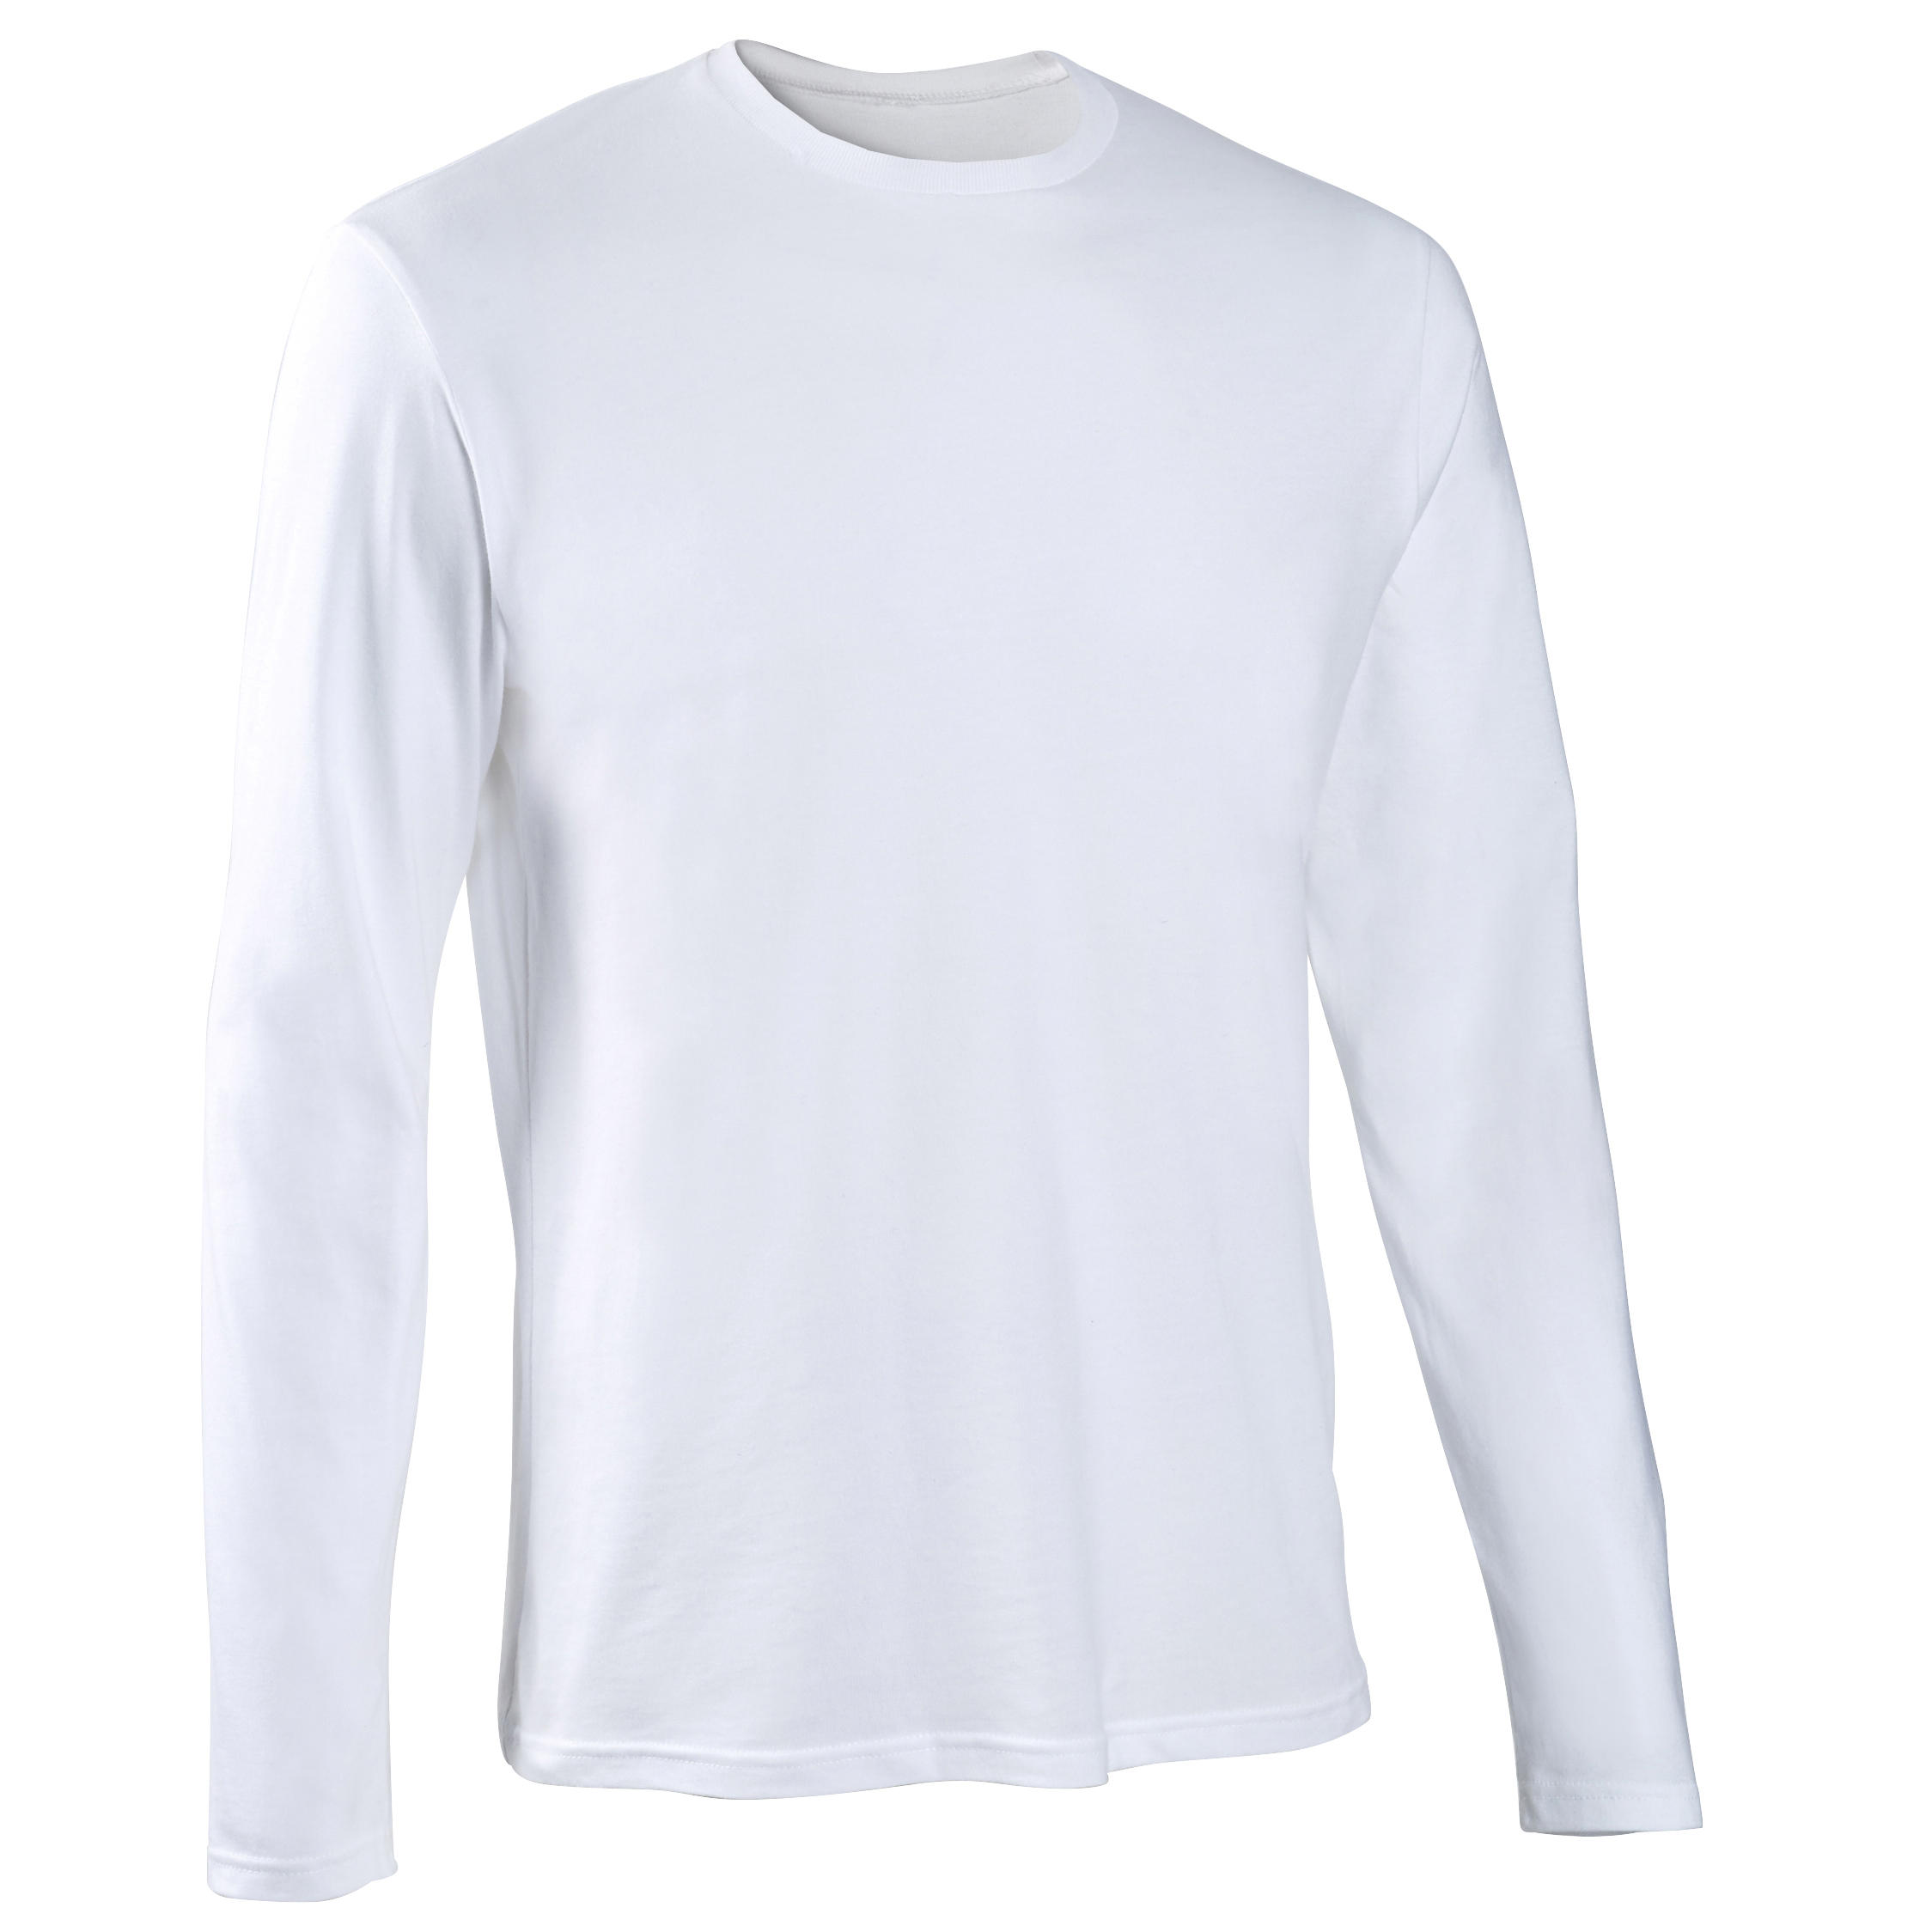 Men's Long-Sleeved Straight-Cut Crew Neck Cotton Fitness T-Shirt 100 - Glacier White 5/5